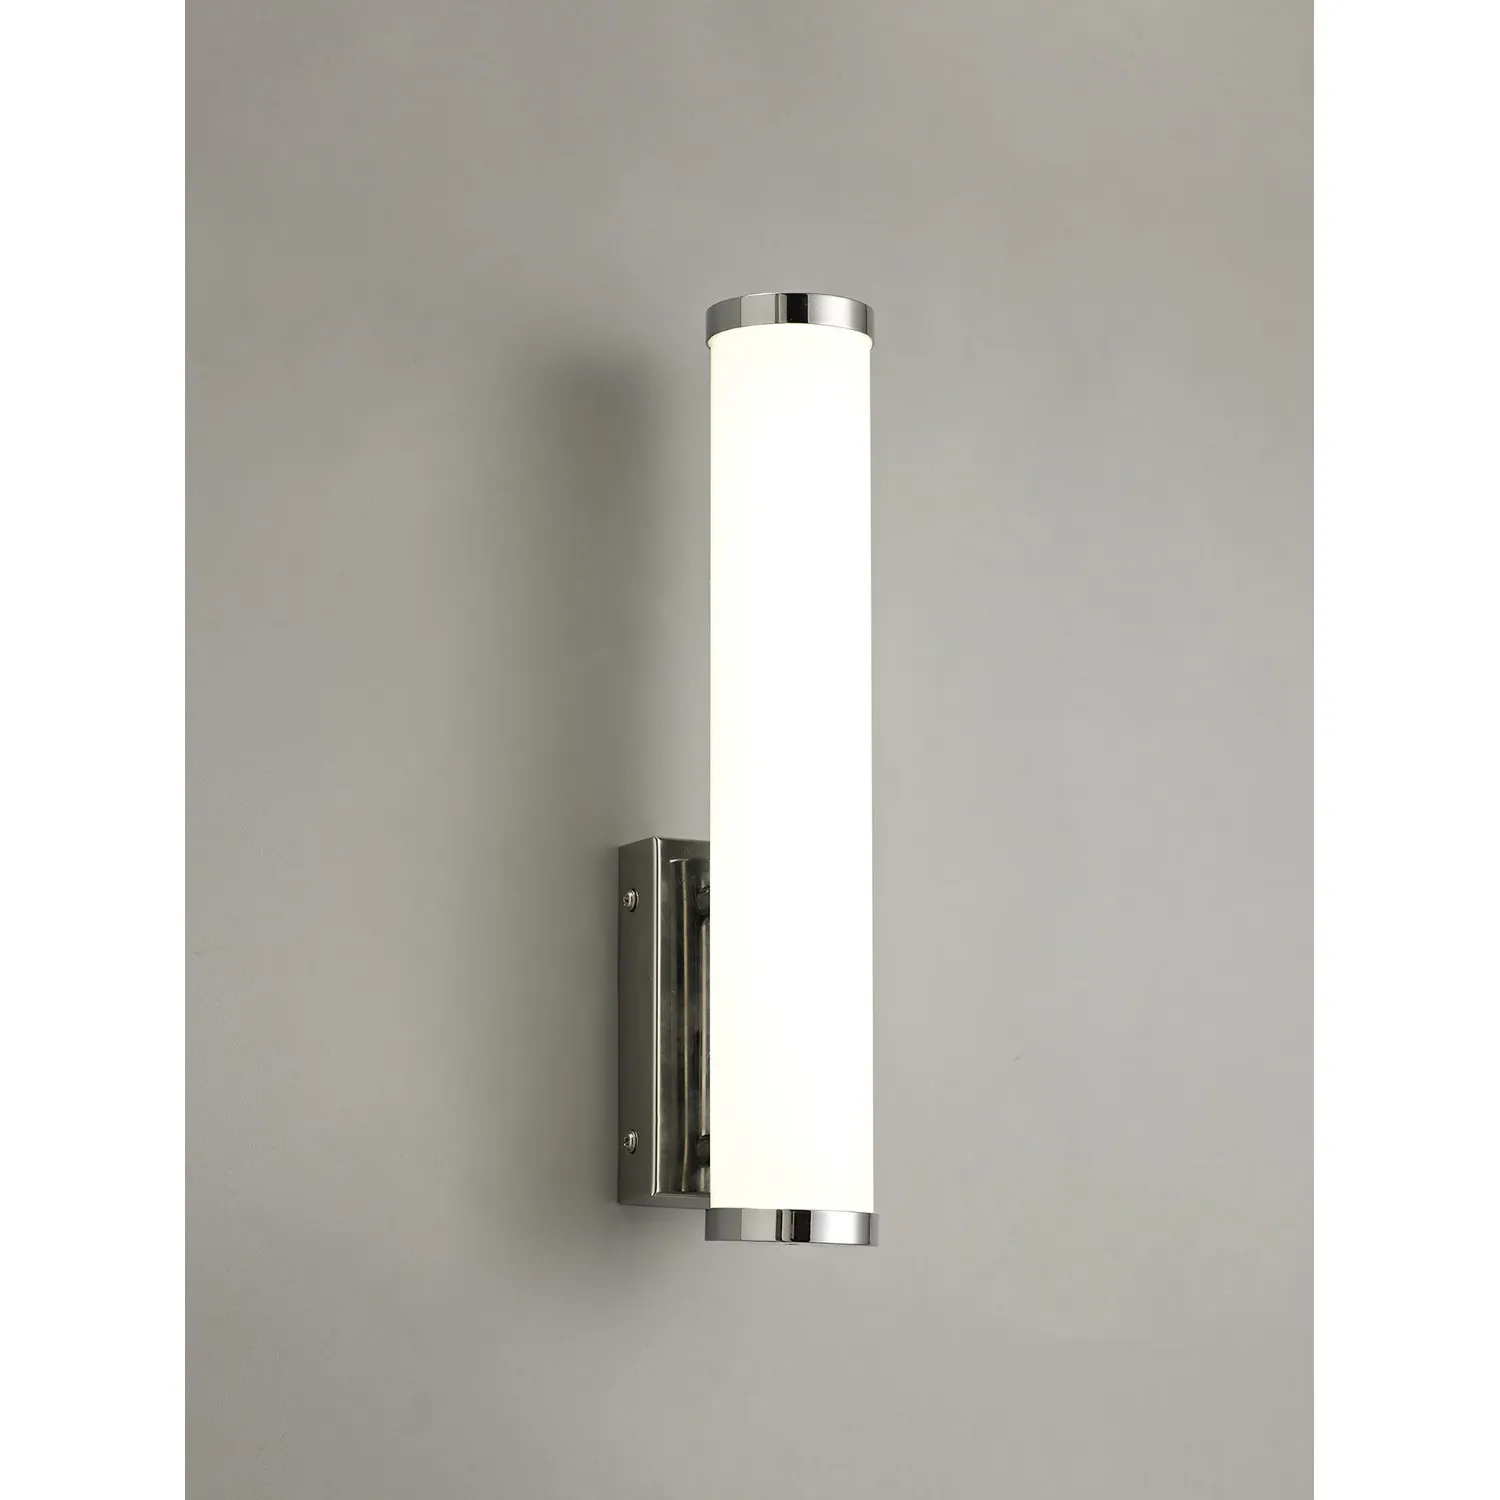 Abbey Wall Lamp Small, 1 x 9W LED, 4000K, 621lm, IP44, Polished Chrome, 3yrs Warranty